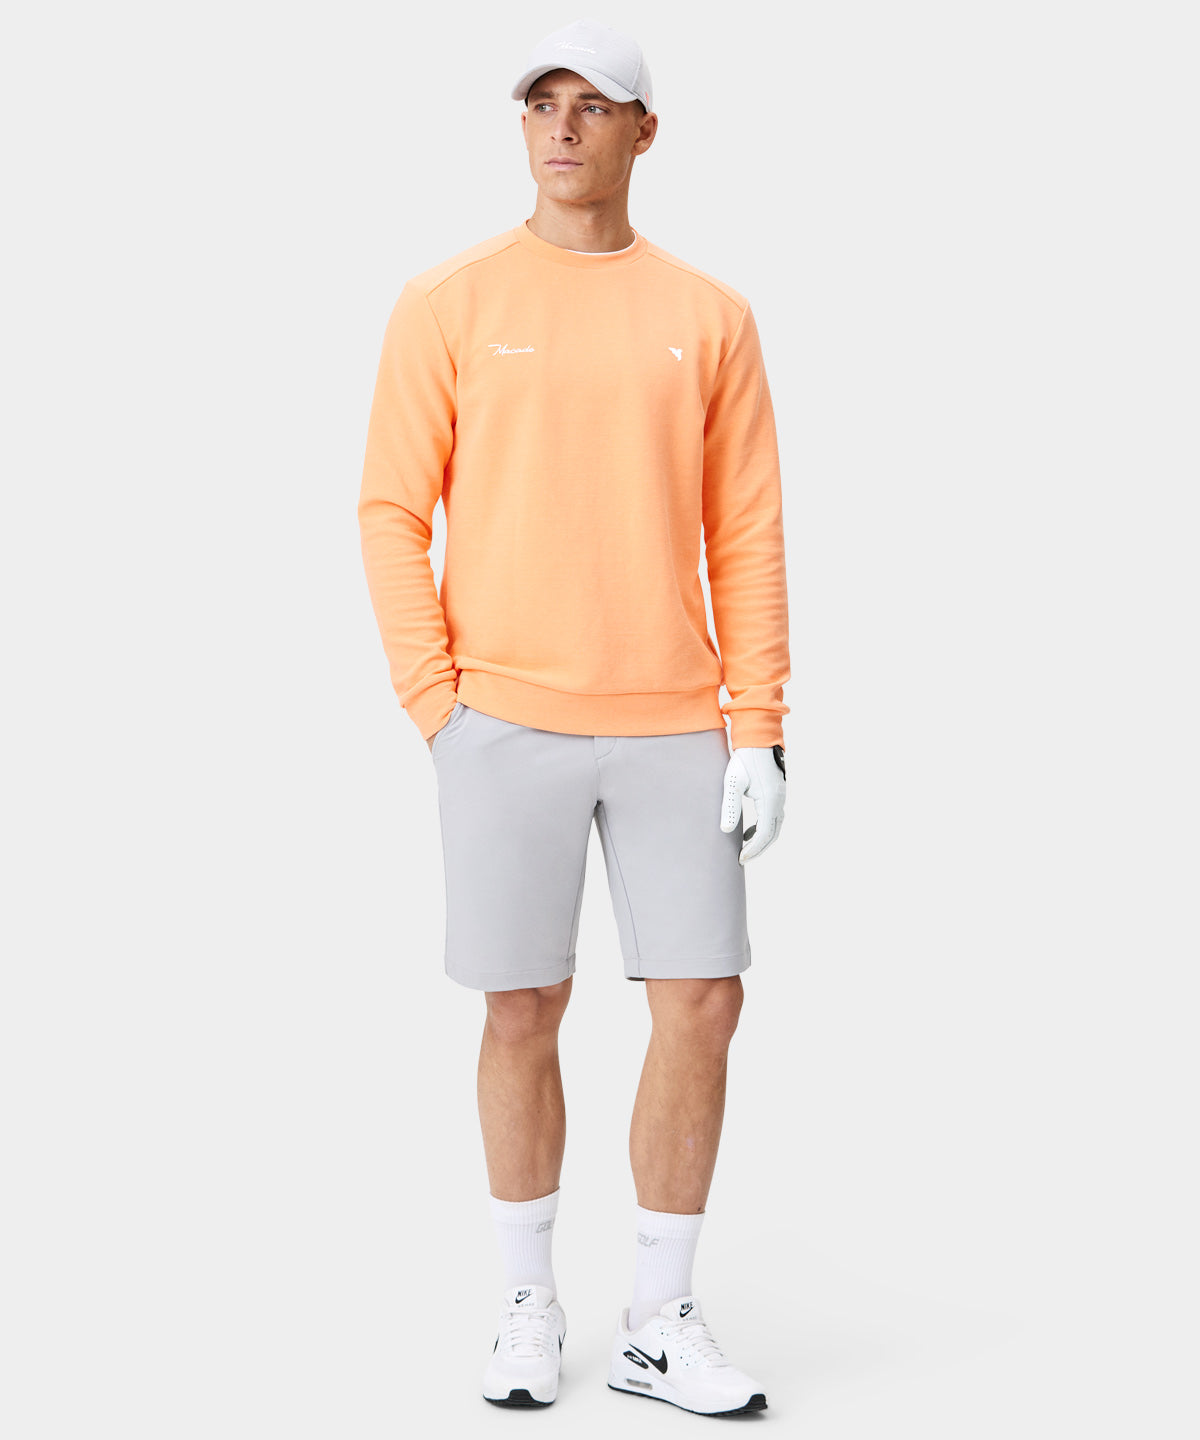 Light Grey Four-Way Stretch Shorts Macade Golf